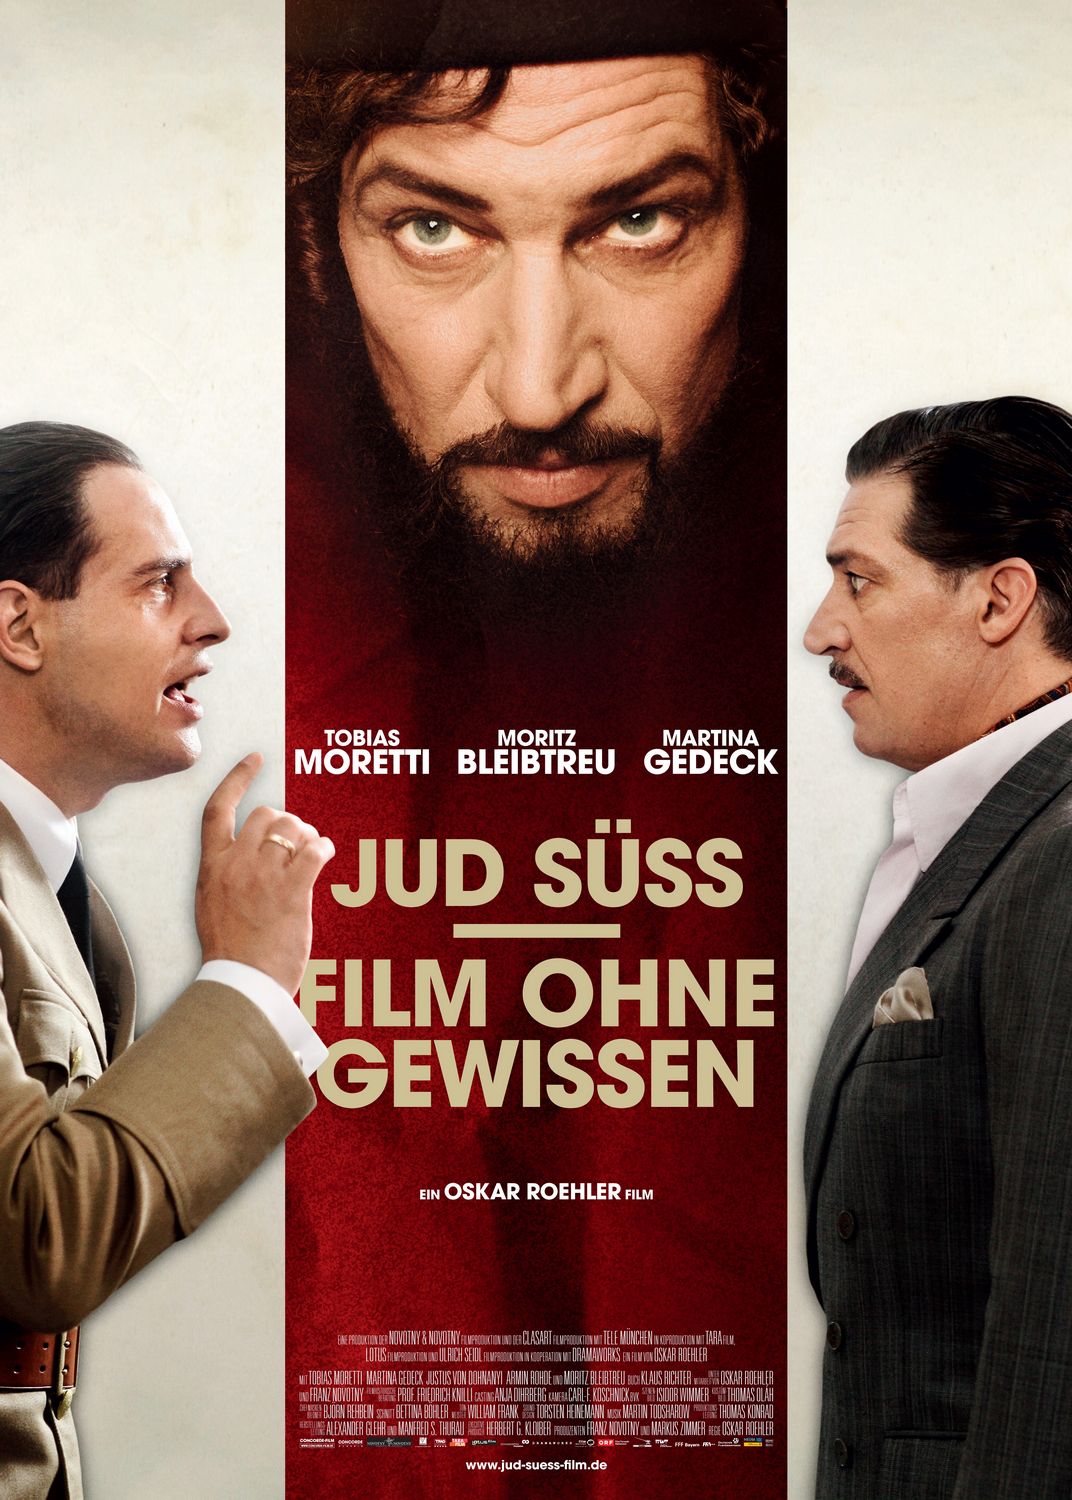 Extra Large Movie Poster Image for Jud Süss - Film ohne Gewissen (#1 of 4)